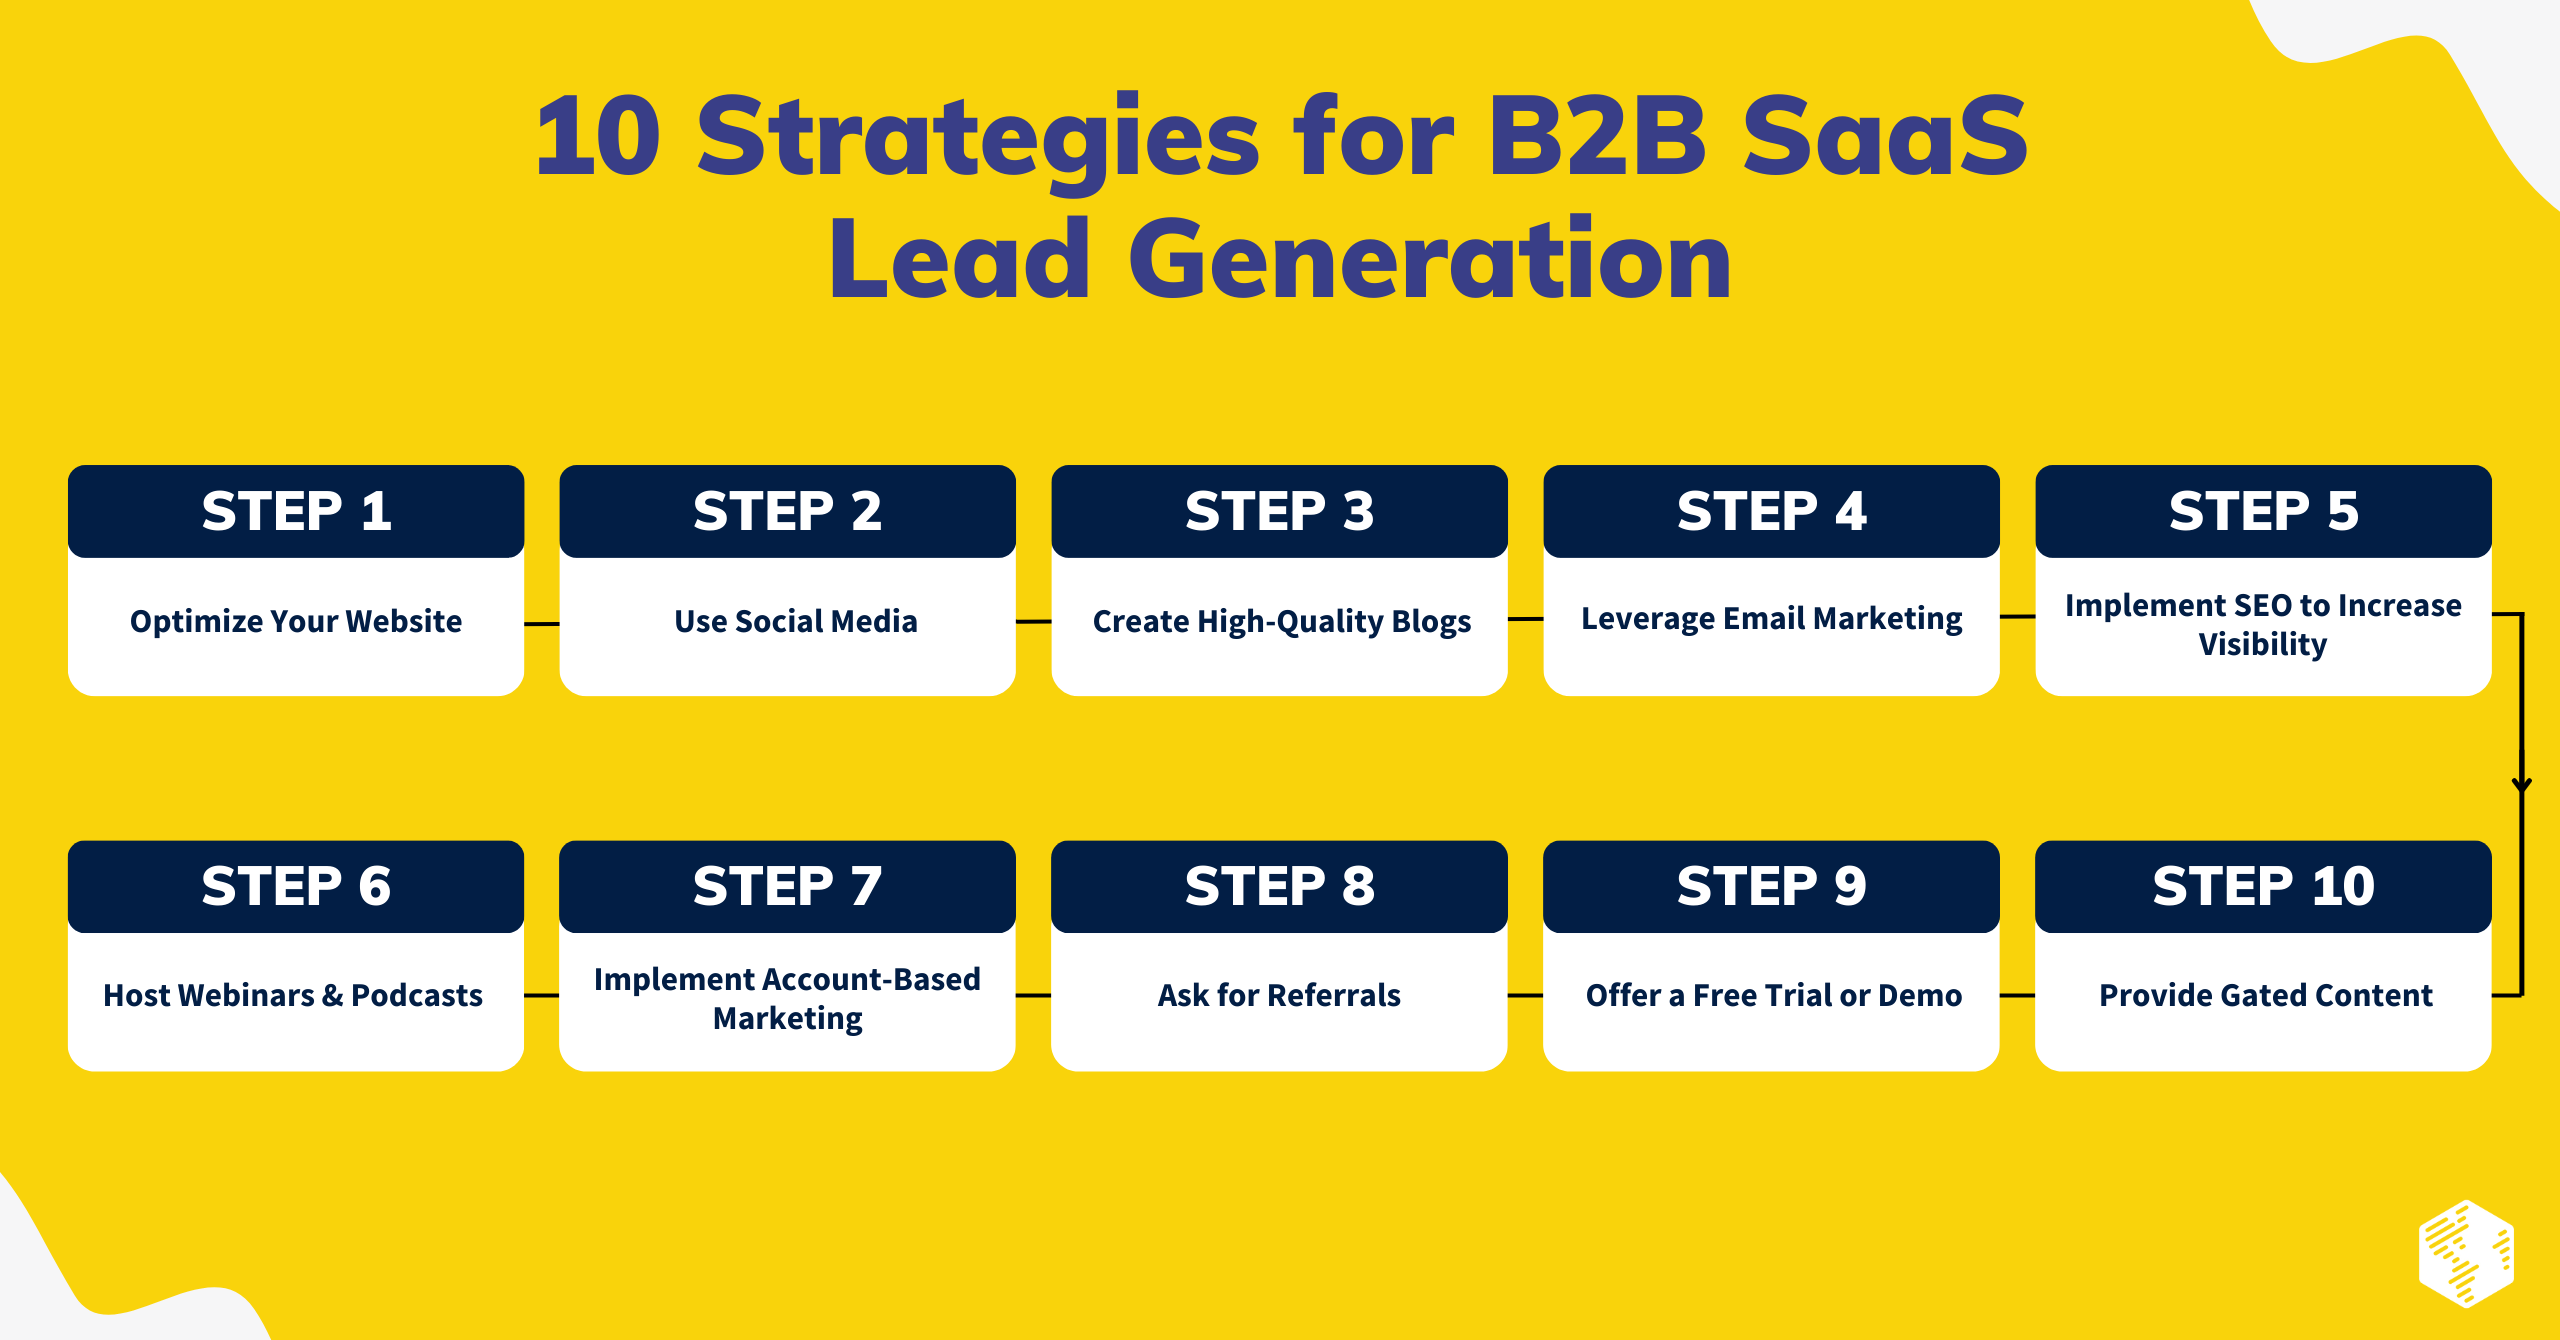 B2B SaaS Lead Generation Strategies